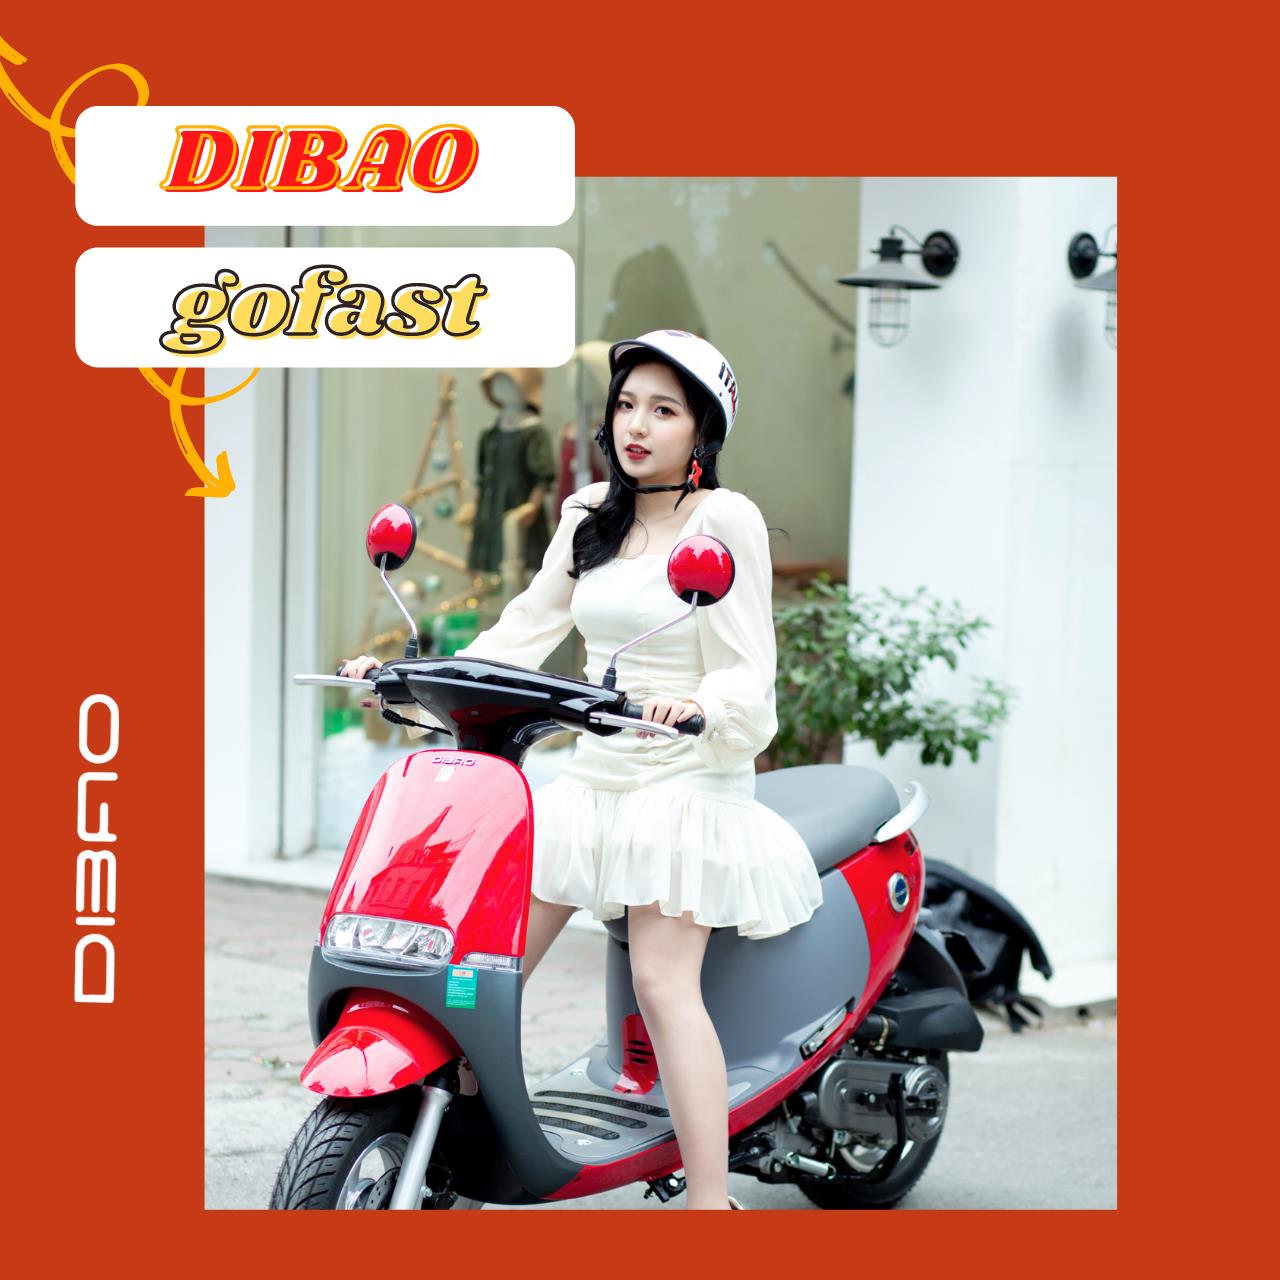 xe ga 50cc cho nữ - Gofast Dibao